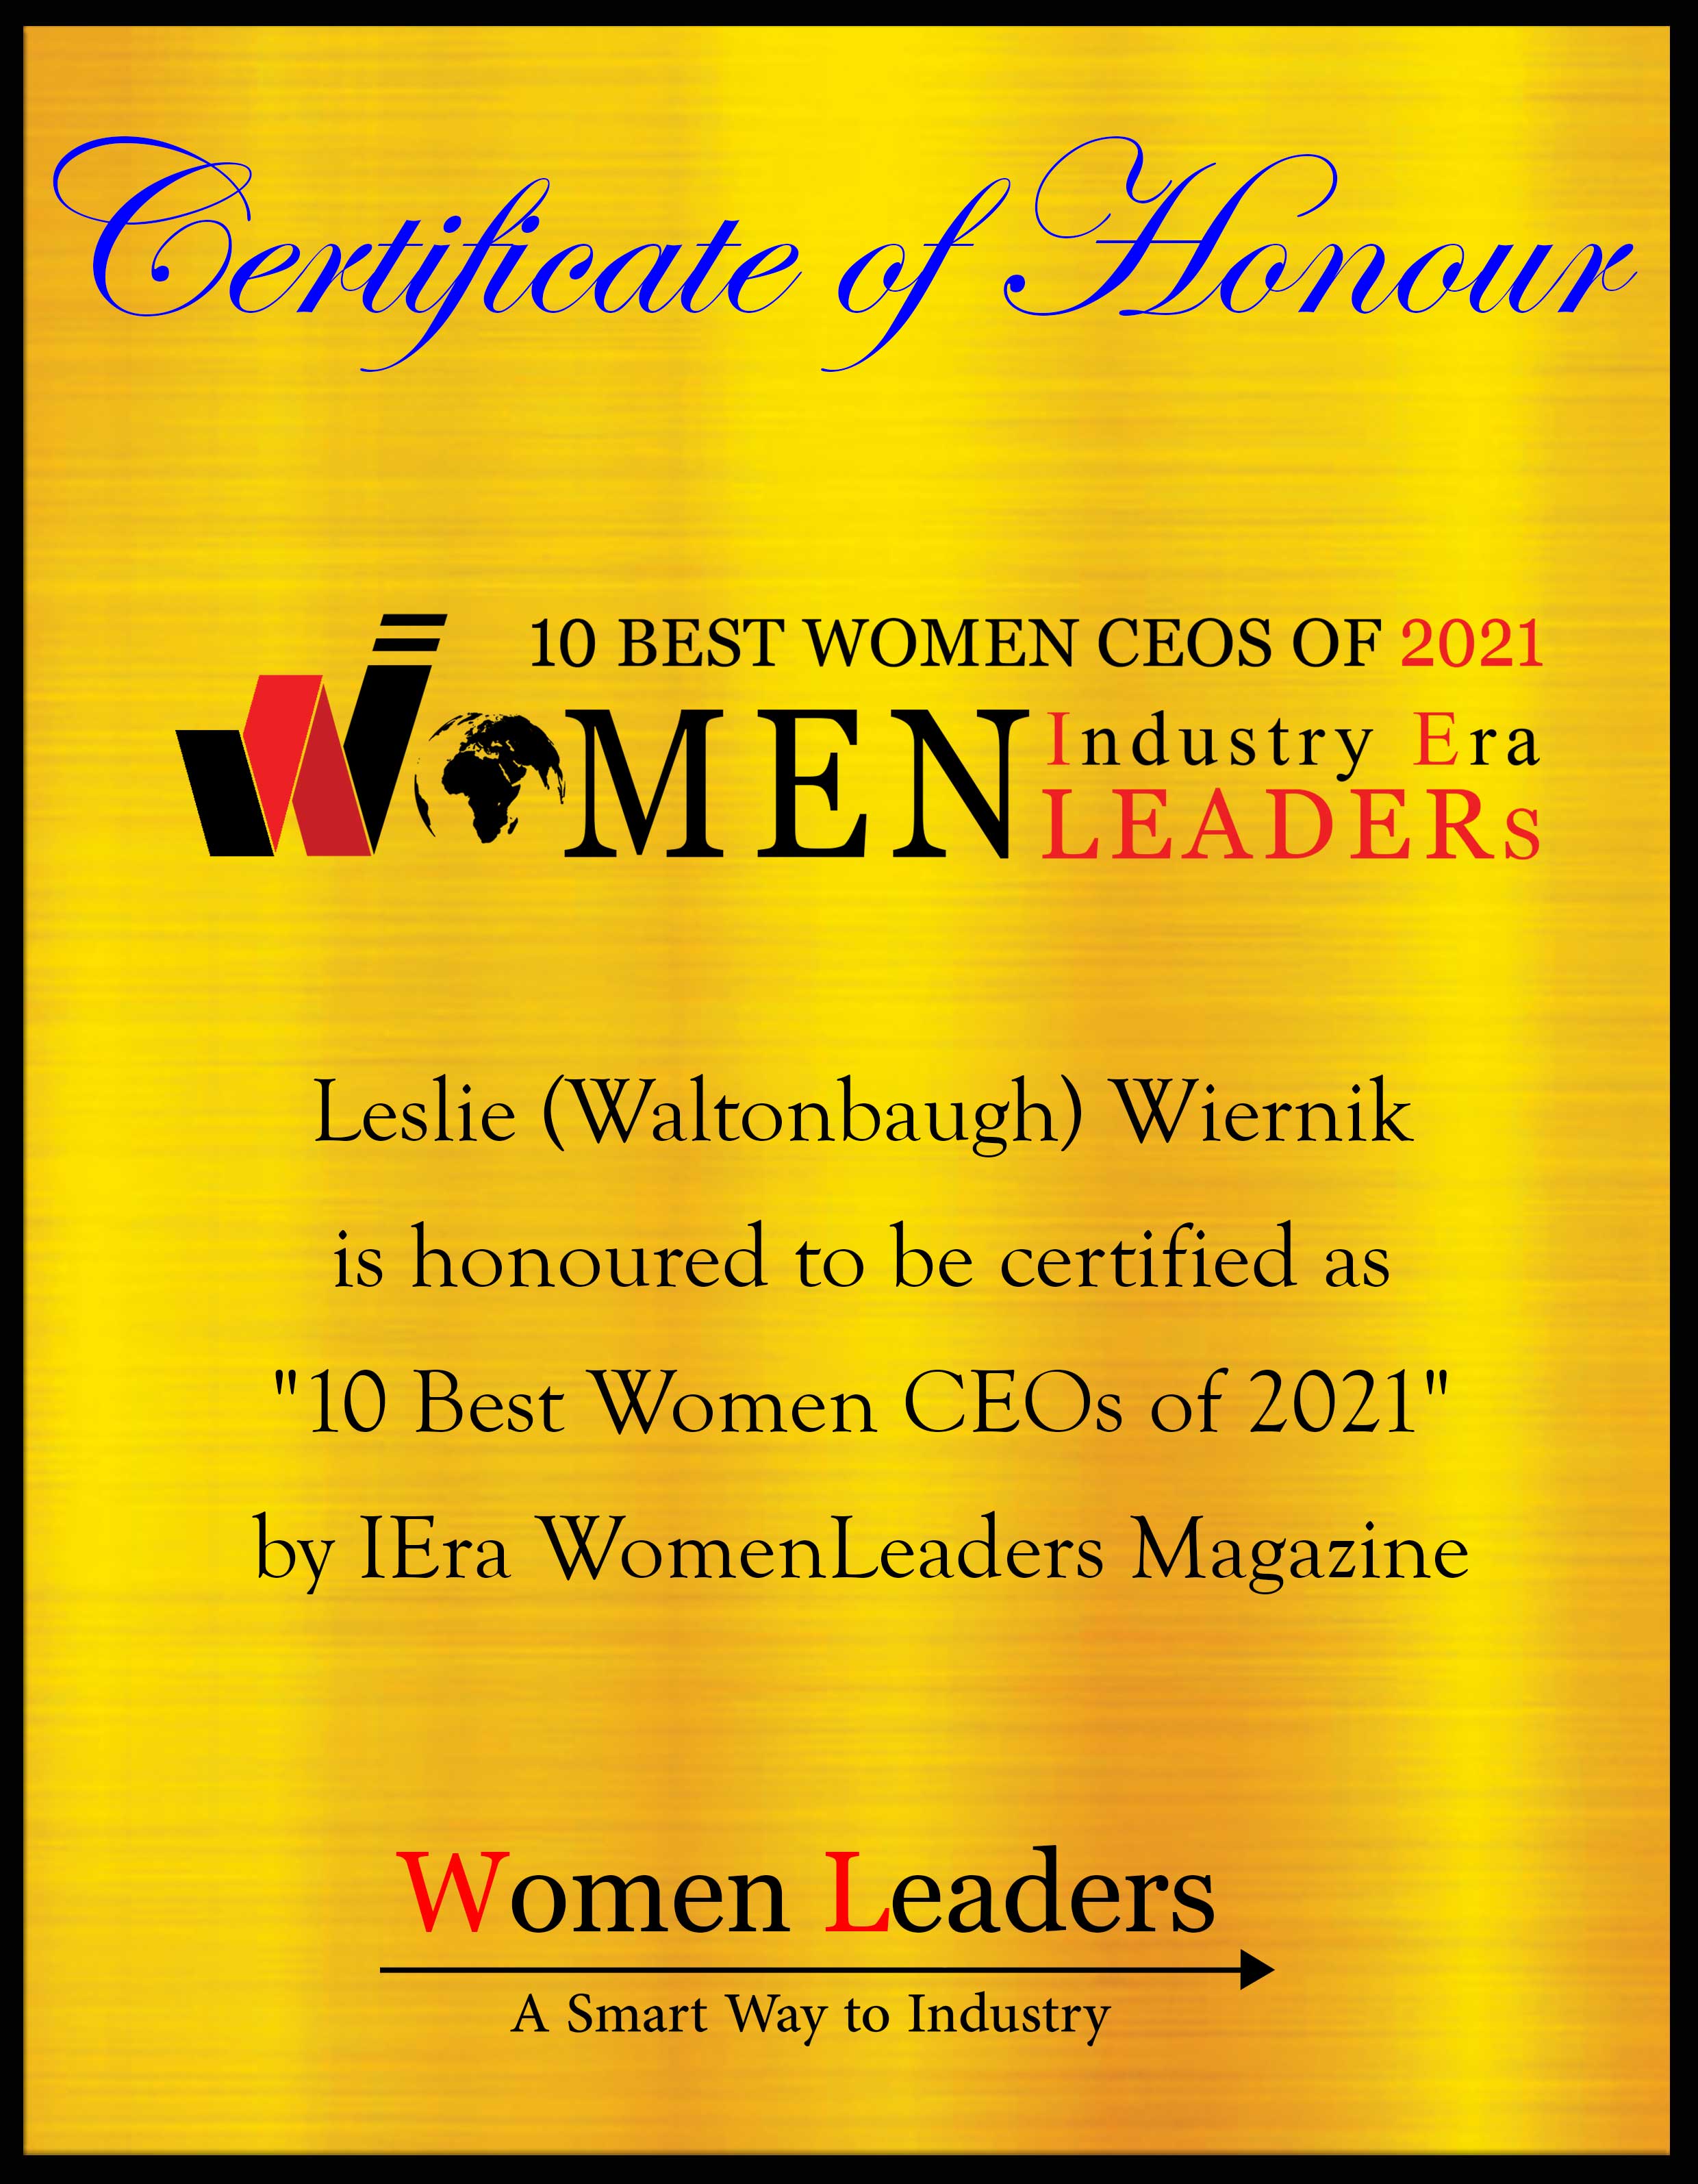 Leslie (Waltonbaugh) Wiernik, CEO of National Association of Subrogation Professionals, Best Women CEOs of 2021